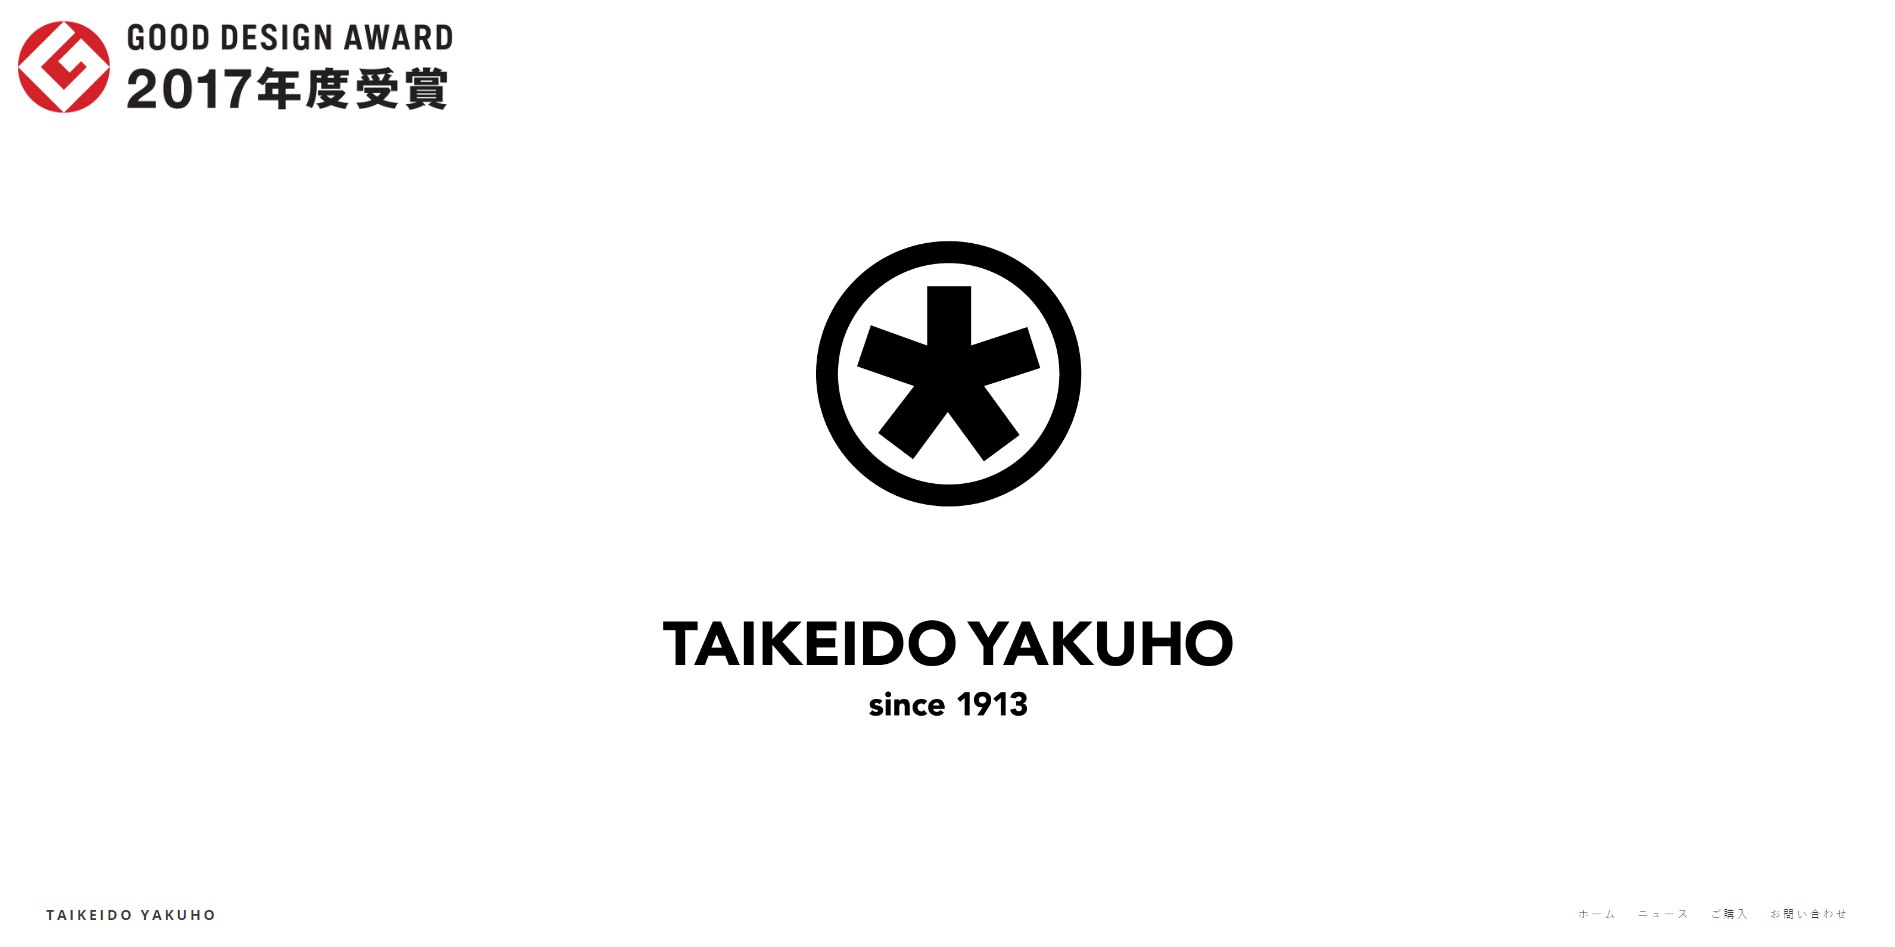 Takeido yakuho